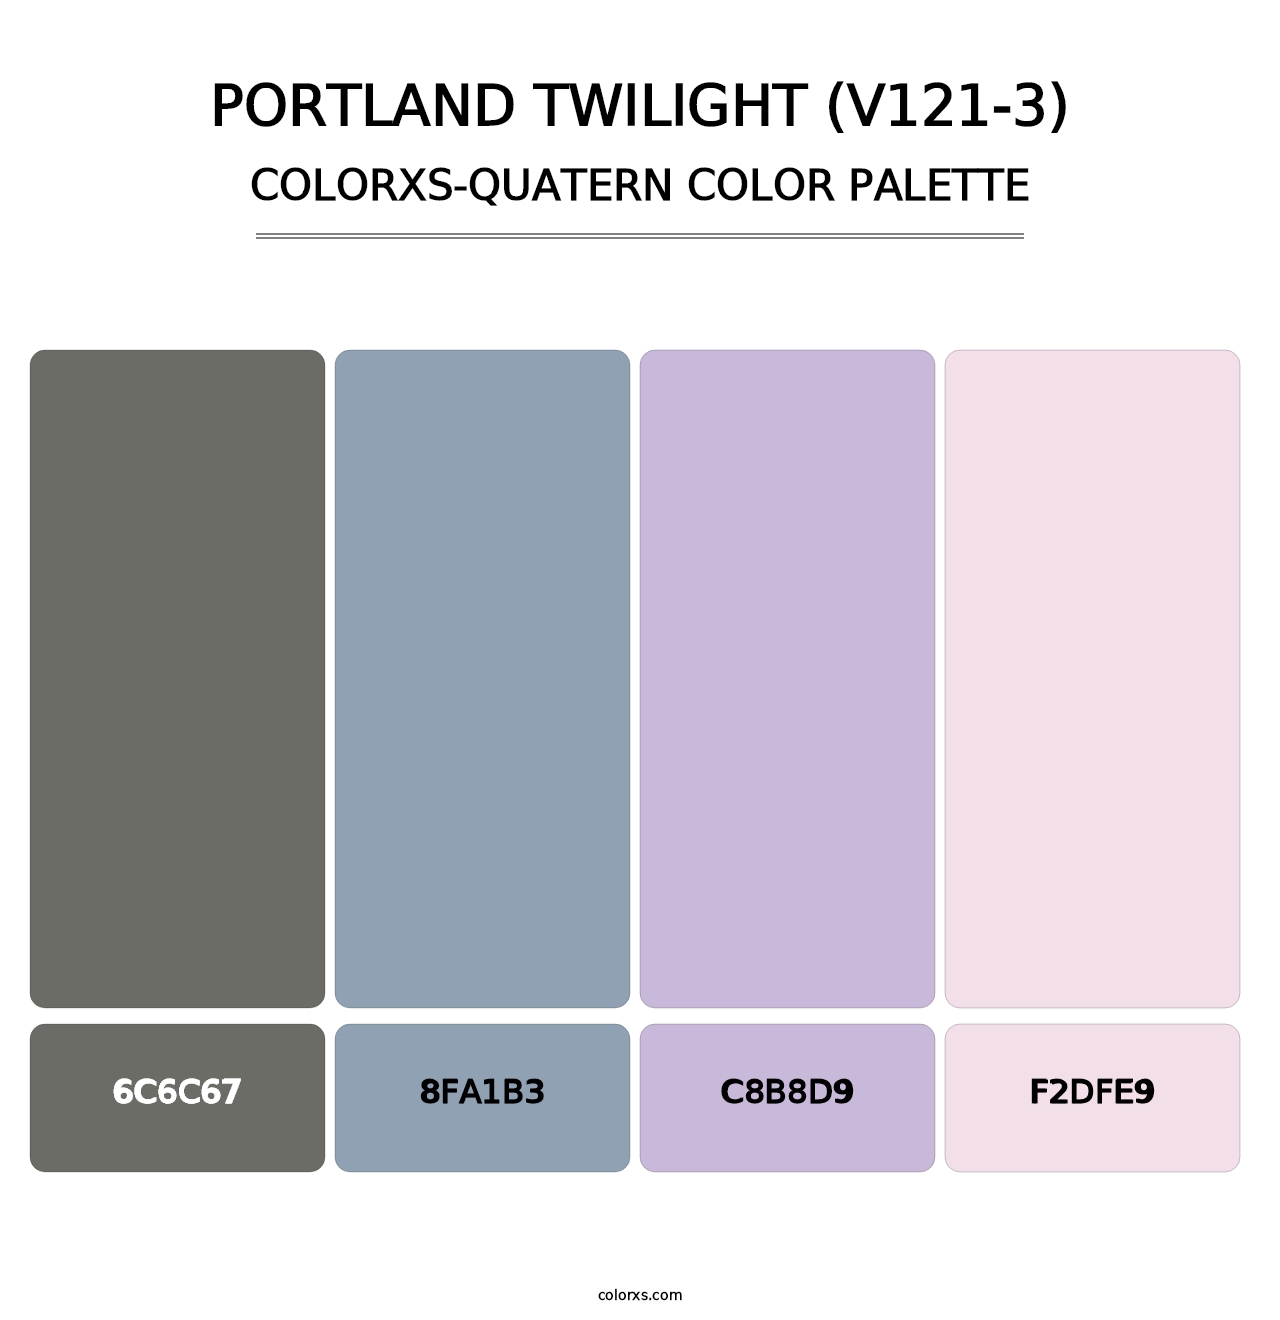 Portland Twilight (V121-3) - Colorxs Quatern Palette